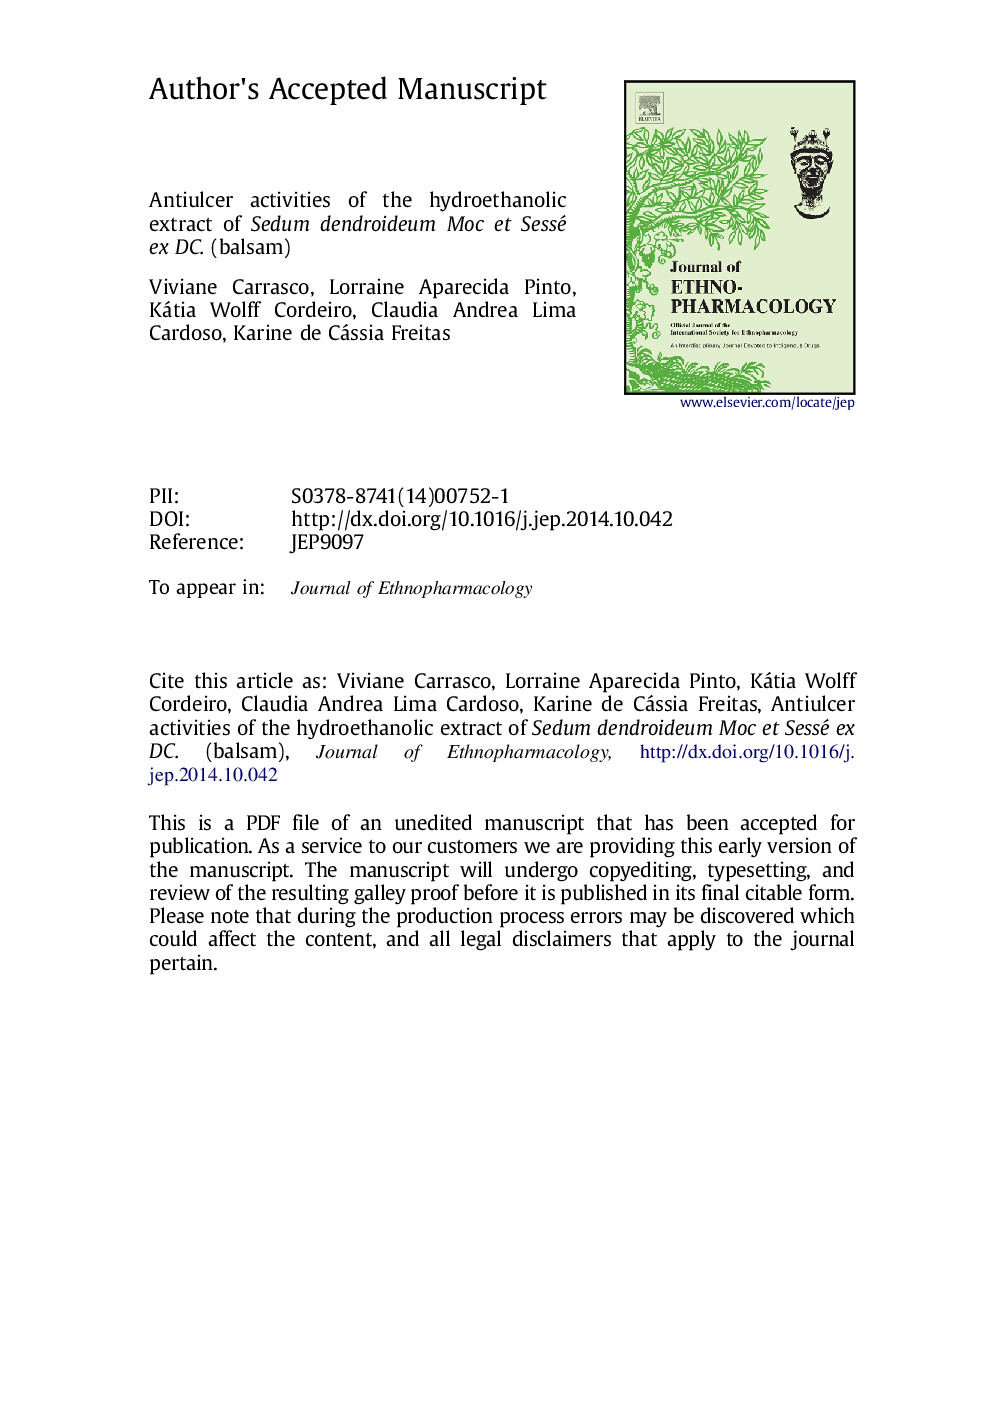 Antiulcer activities of the hydroethanolic extract of Sedum dendroideum Moc et Sessé ex DC. (balsam)